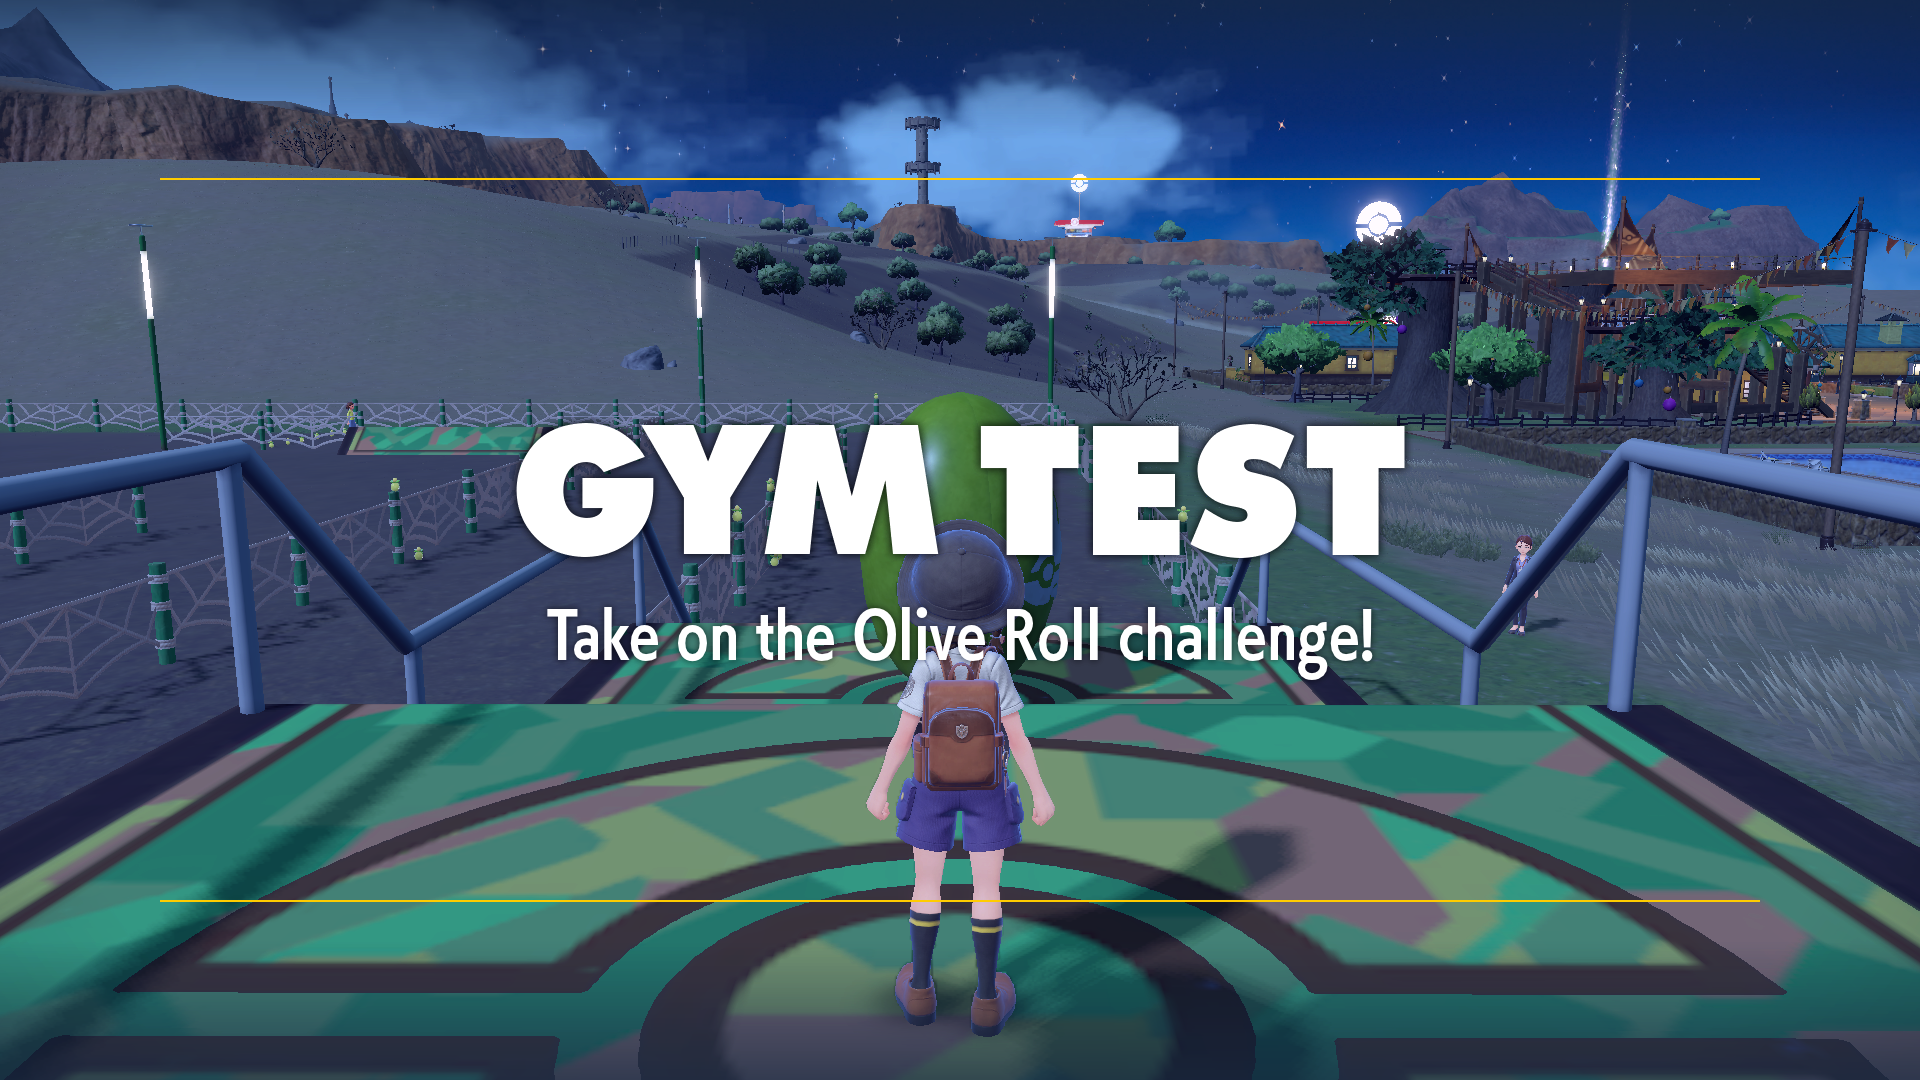 Start of the Bug Gym Challenge.